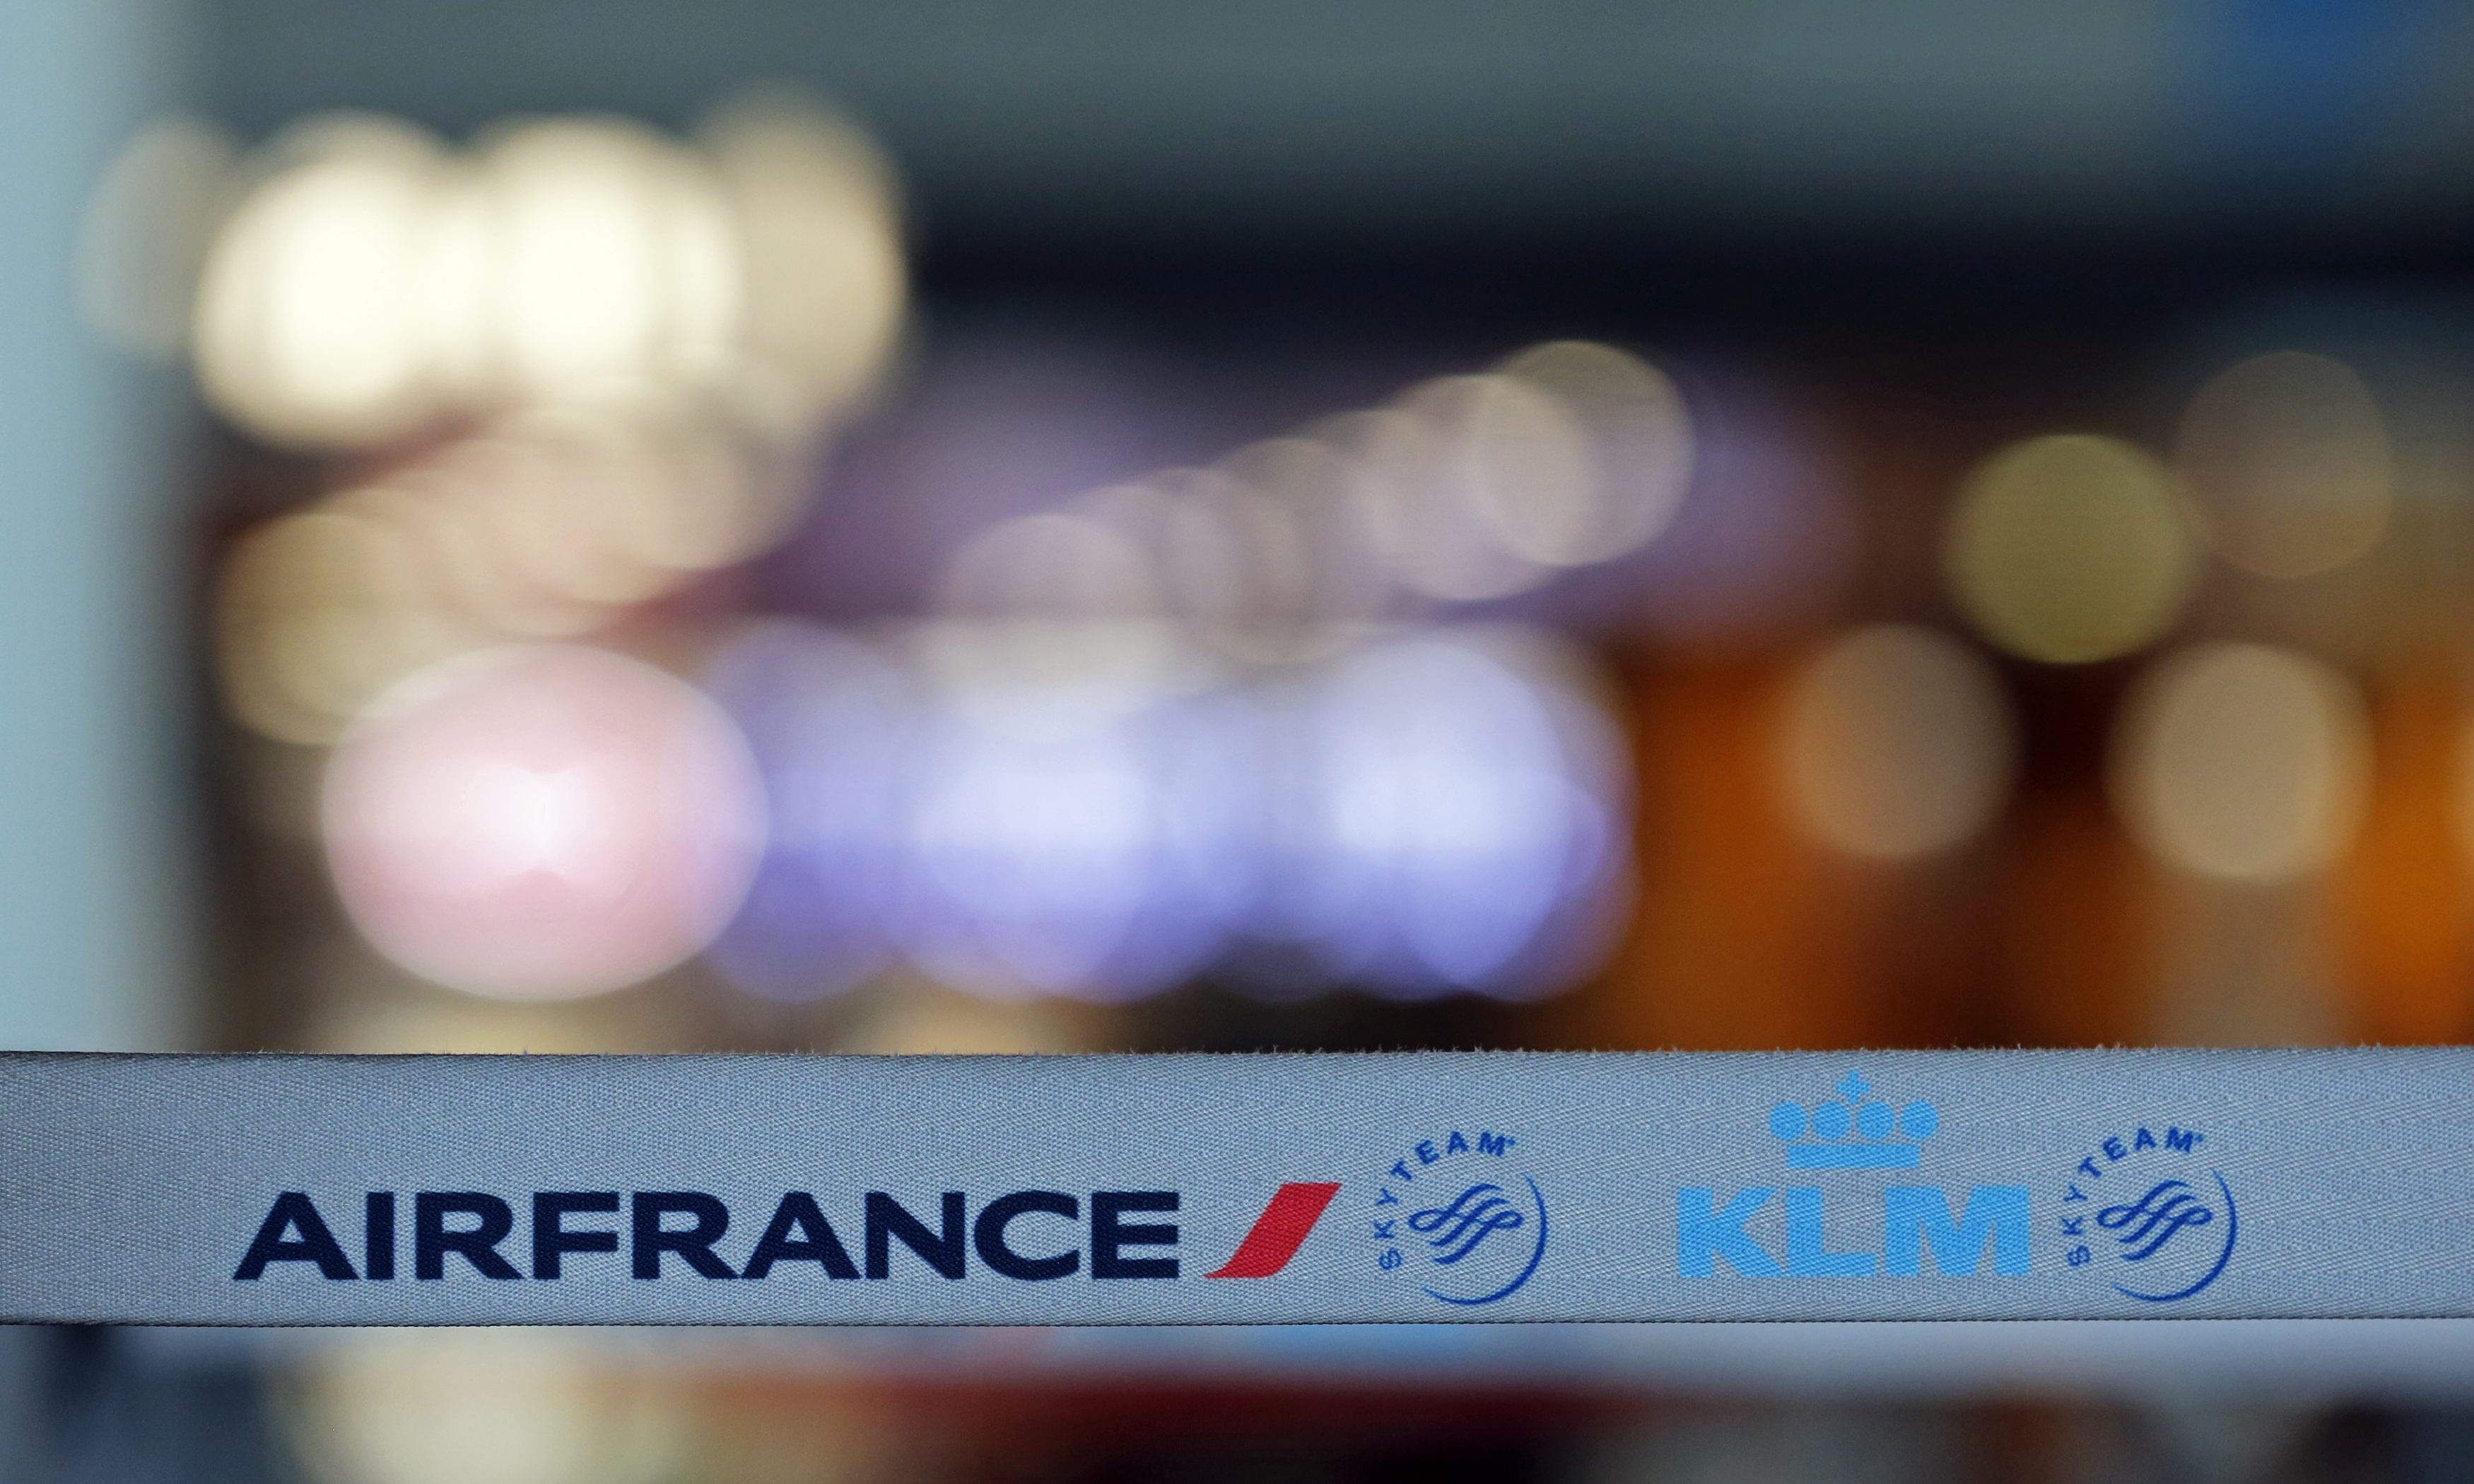 Tercer día de huelga de pilotos de Air France, sin perspectiva de mejora